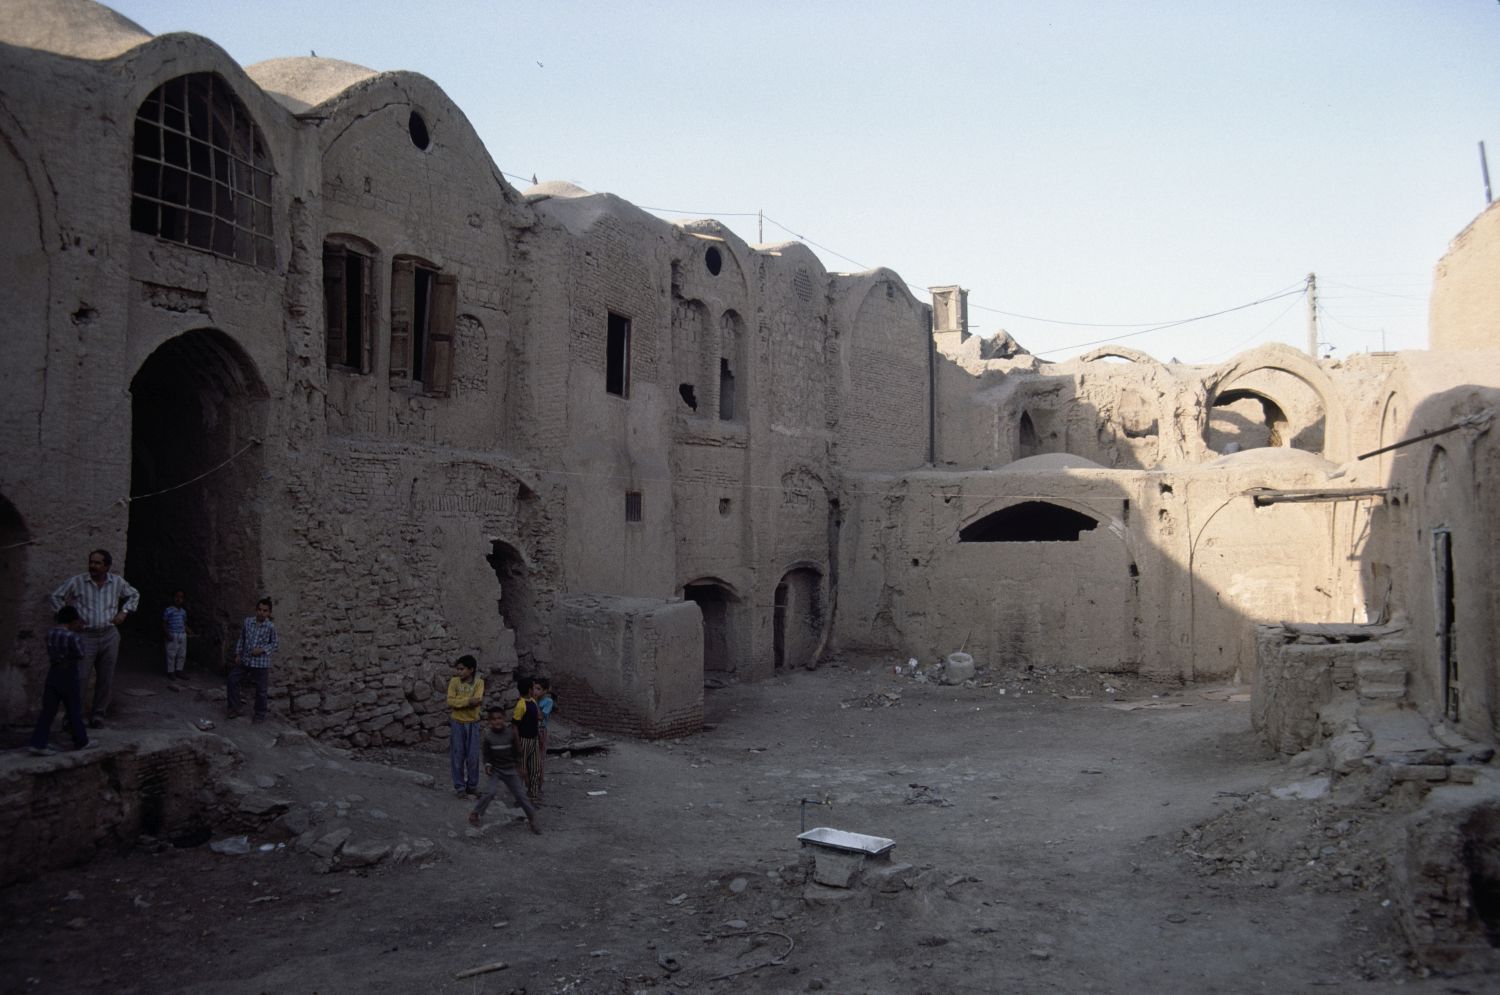 Abandoned caravanserai opposite the Baba Vali Mosque.